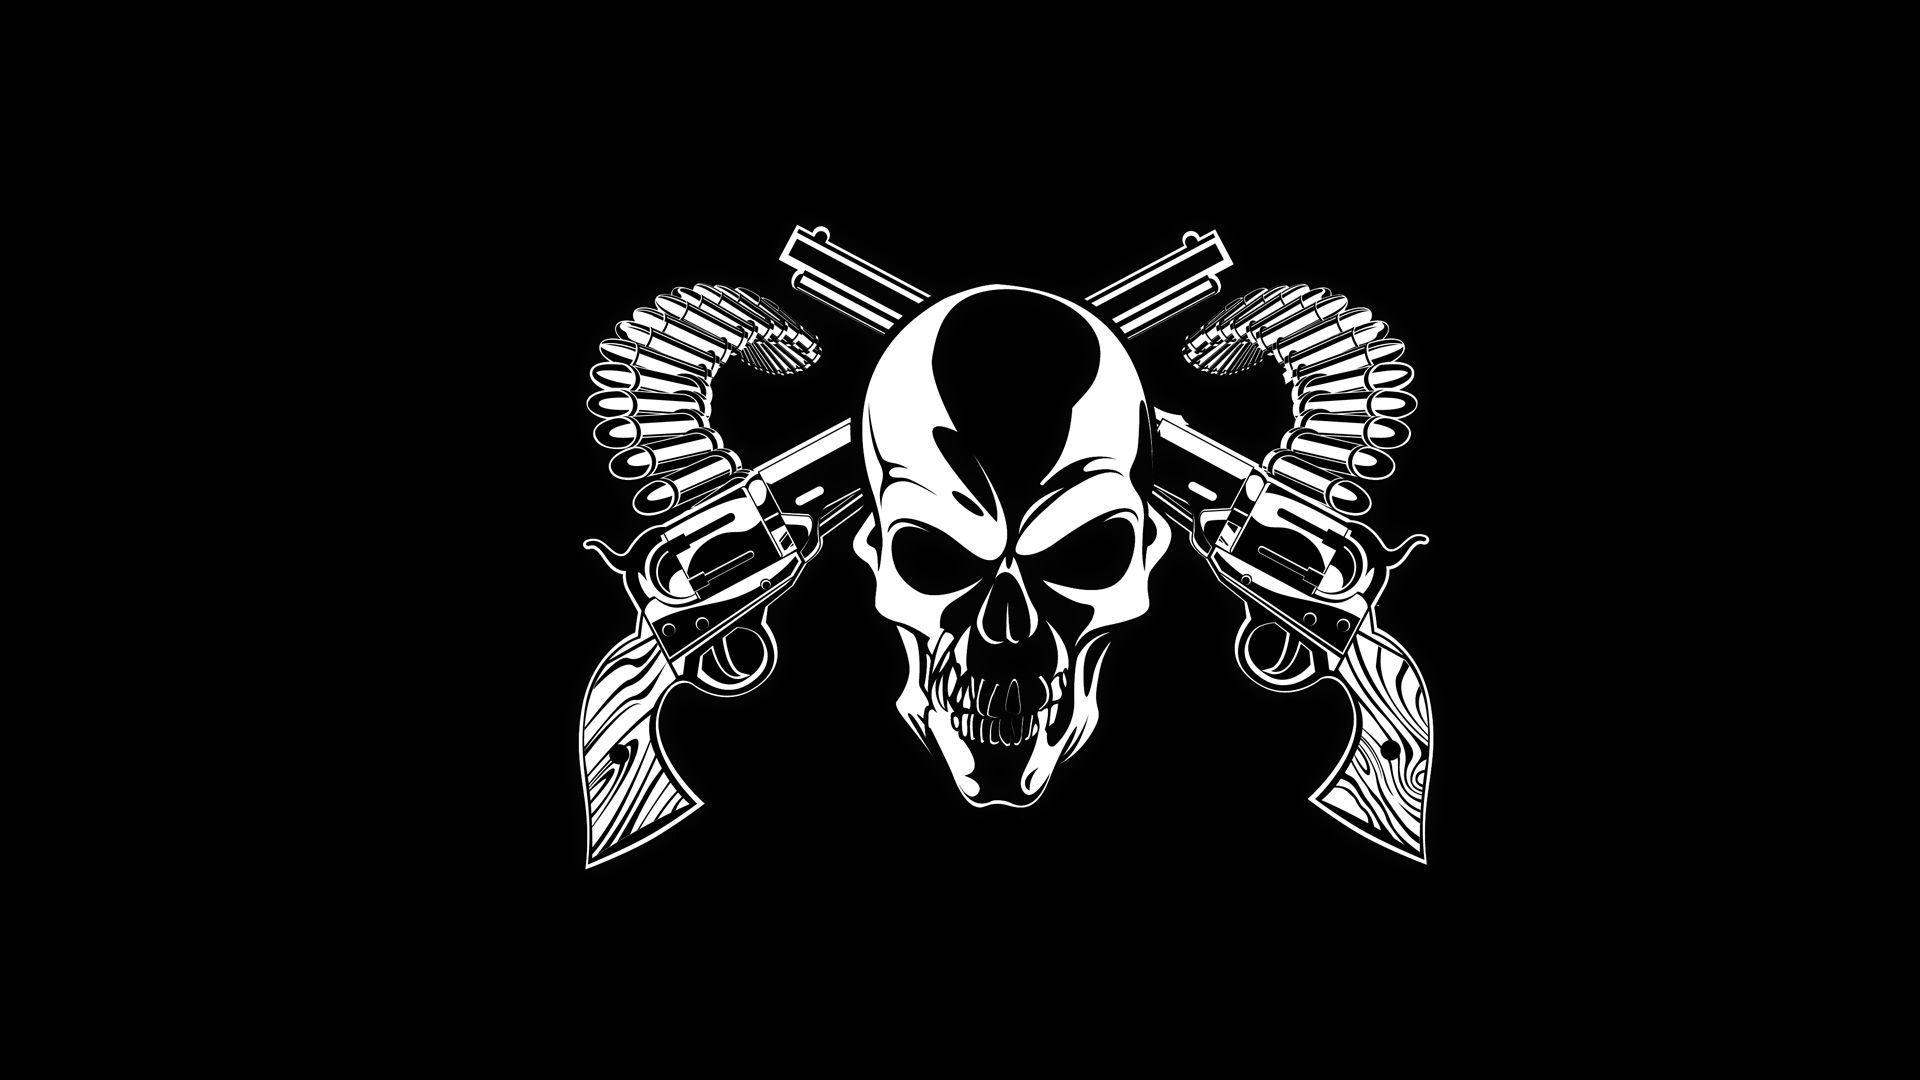 Cool Gun Logo - Skulls Guns Backgrounds Image - Wallpaper Cave